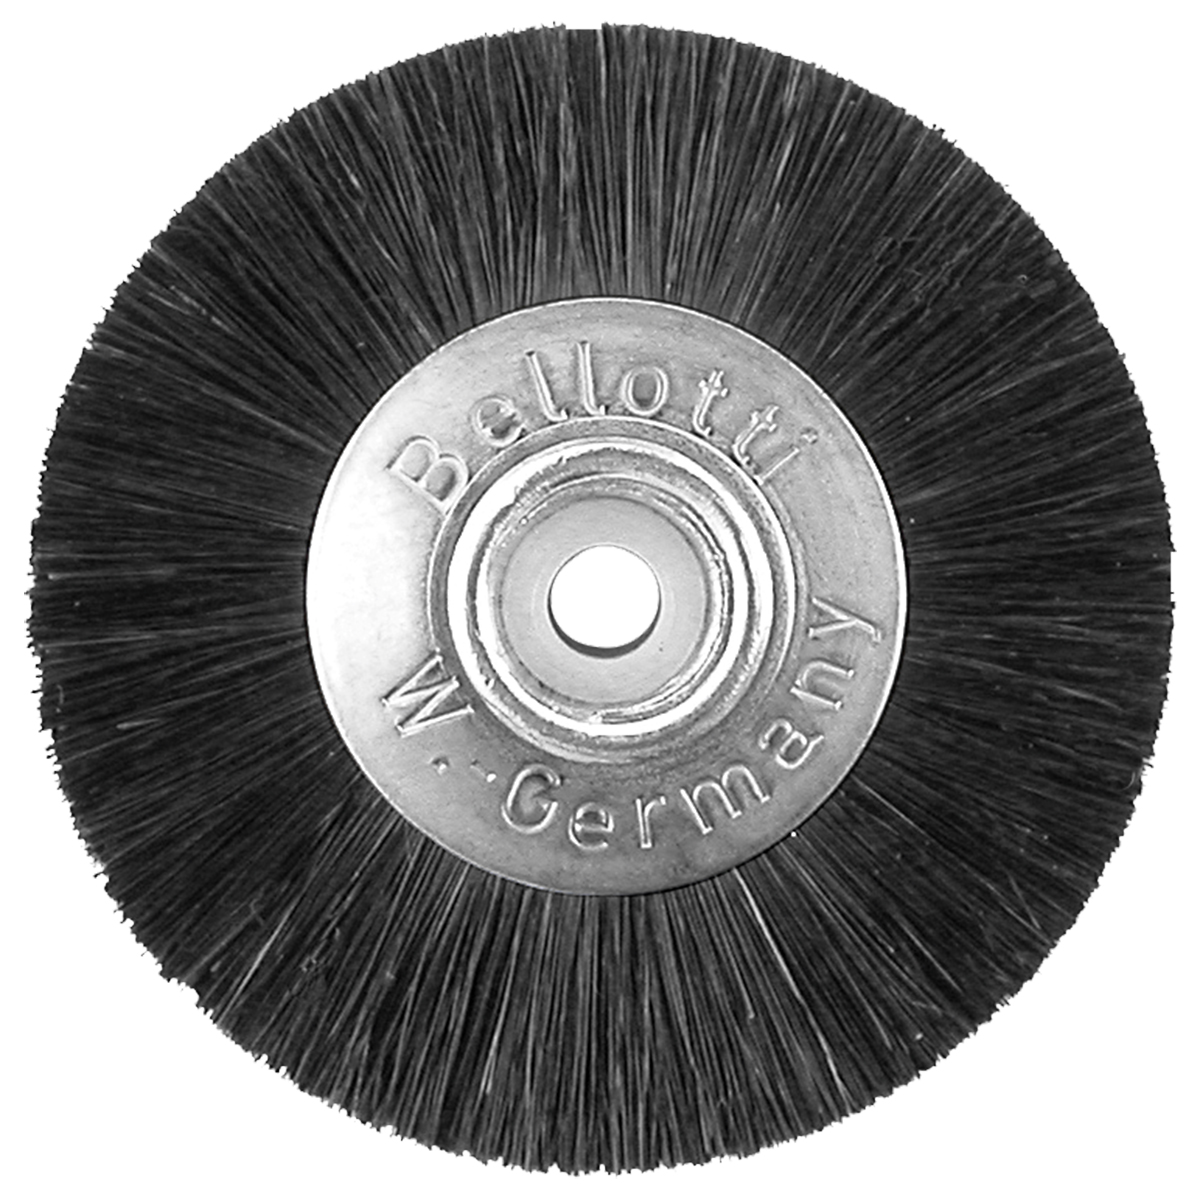 Slimline brush bristles, Ø 49 mm, Chungking bristles, black, metal core and plastic hub